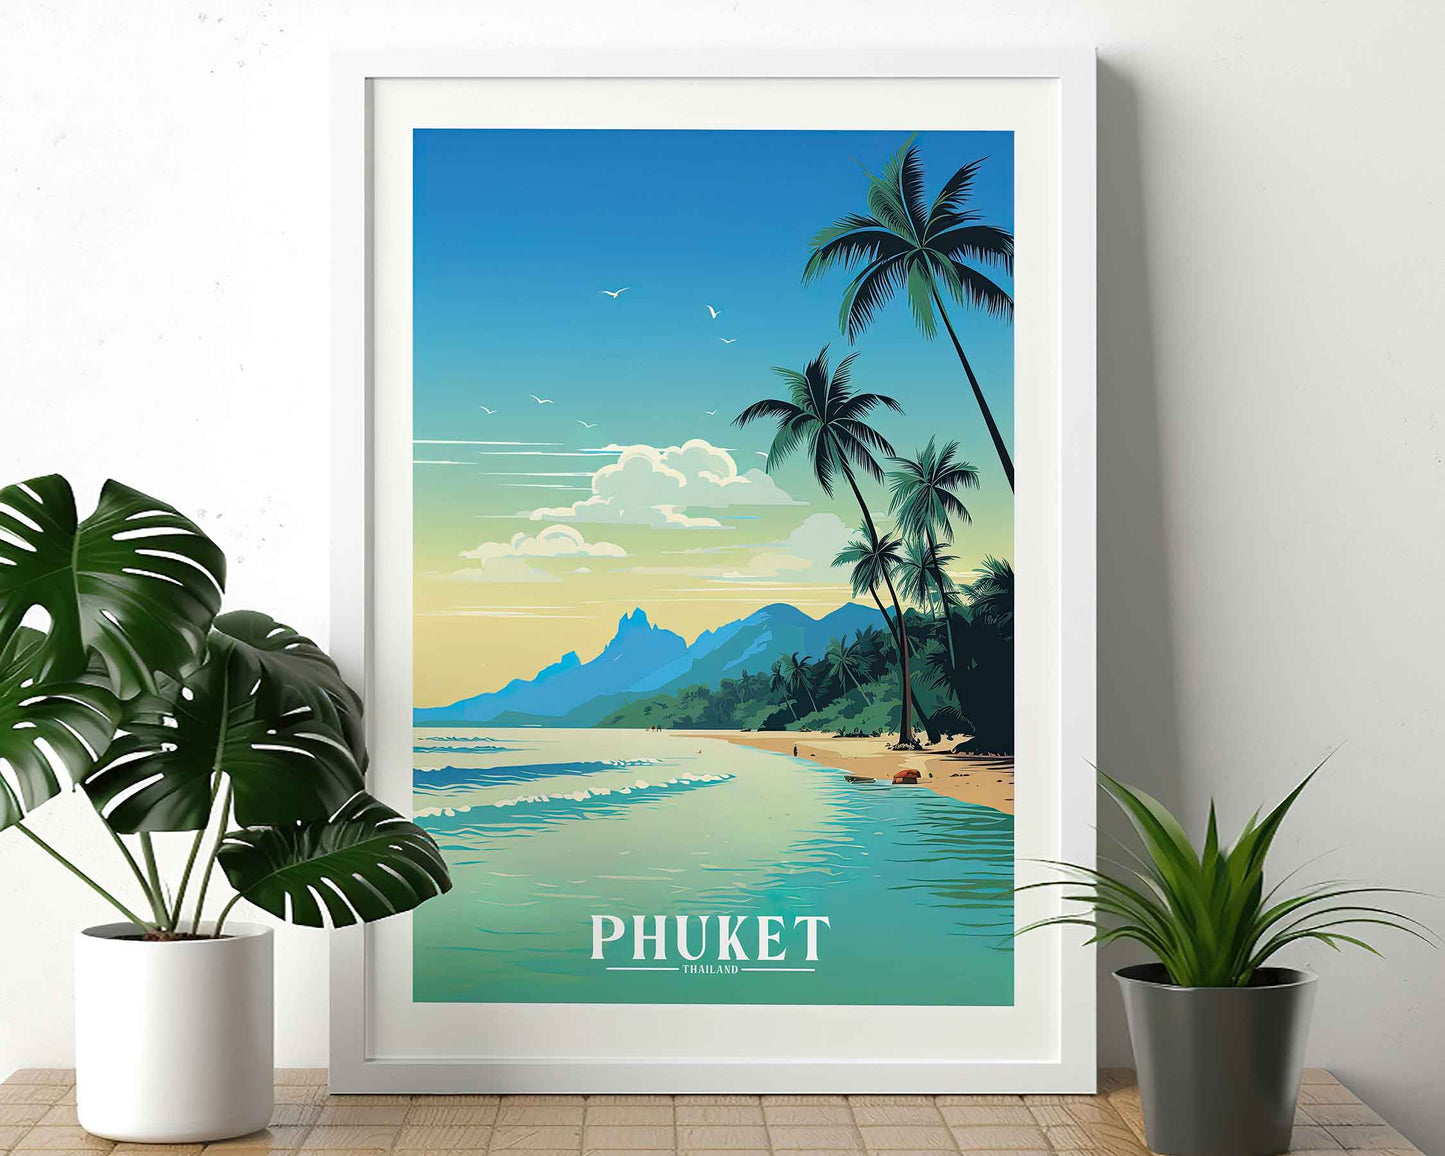 Framed Image of Phuket Thailand Illustration Travel Poster Prints Wall Art